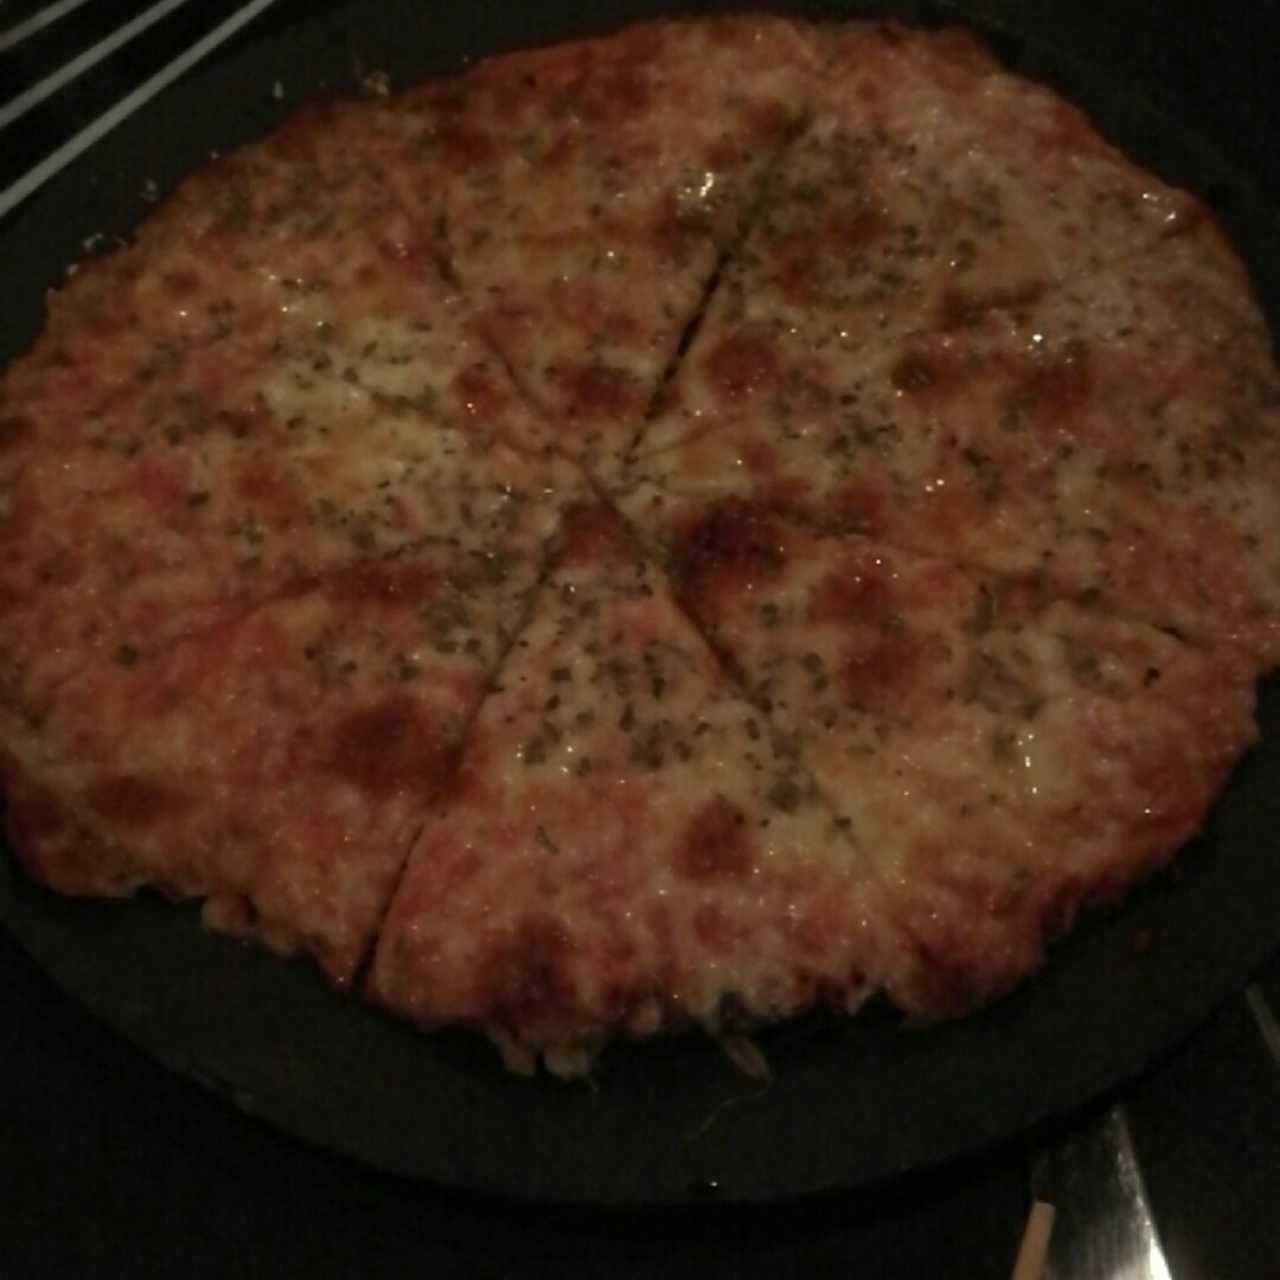 Gourmet pizza - Pizza margarita